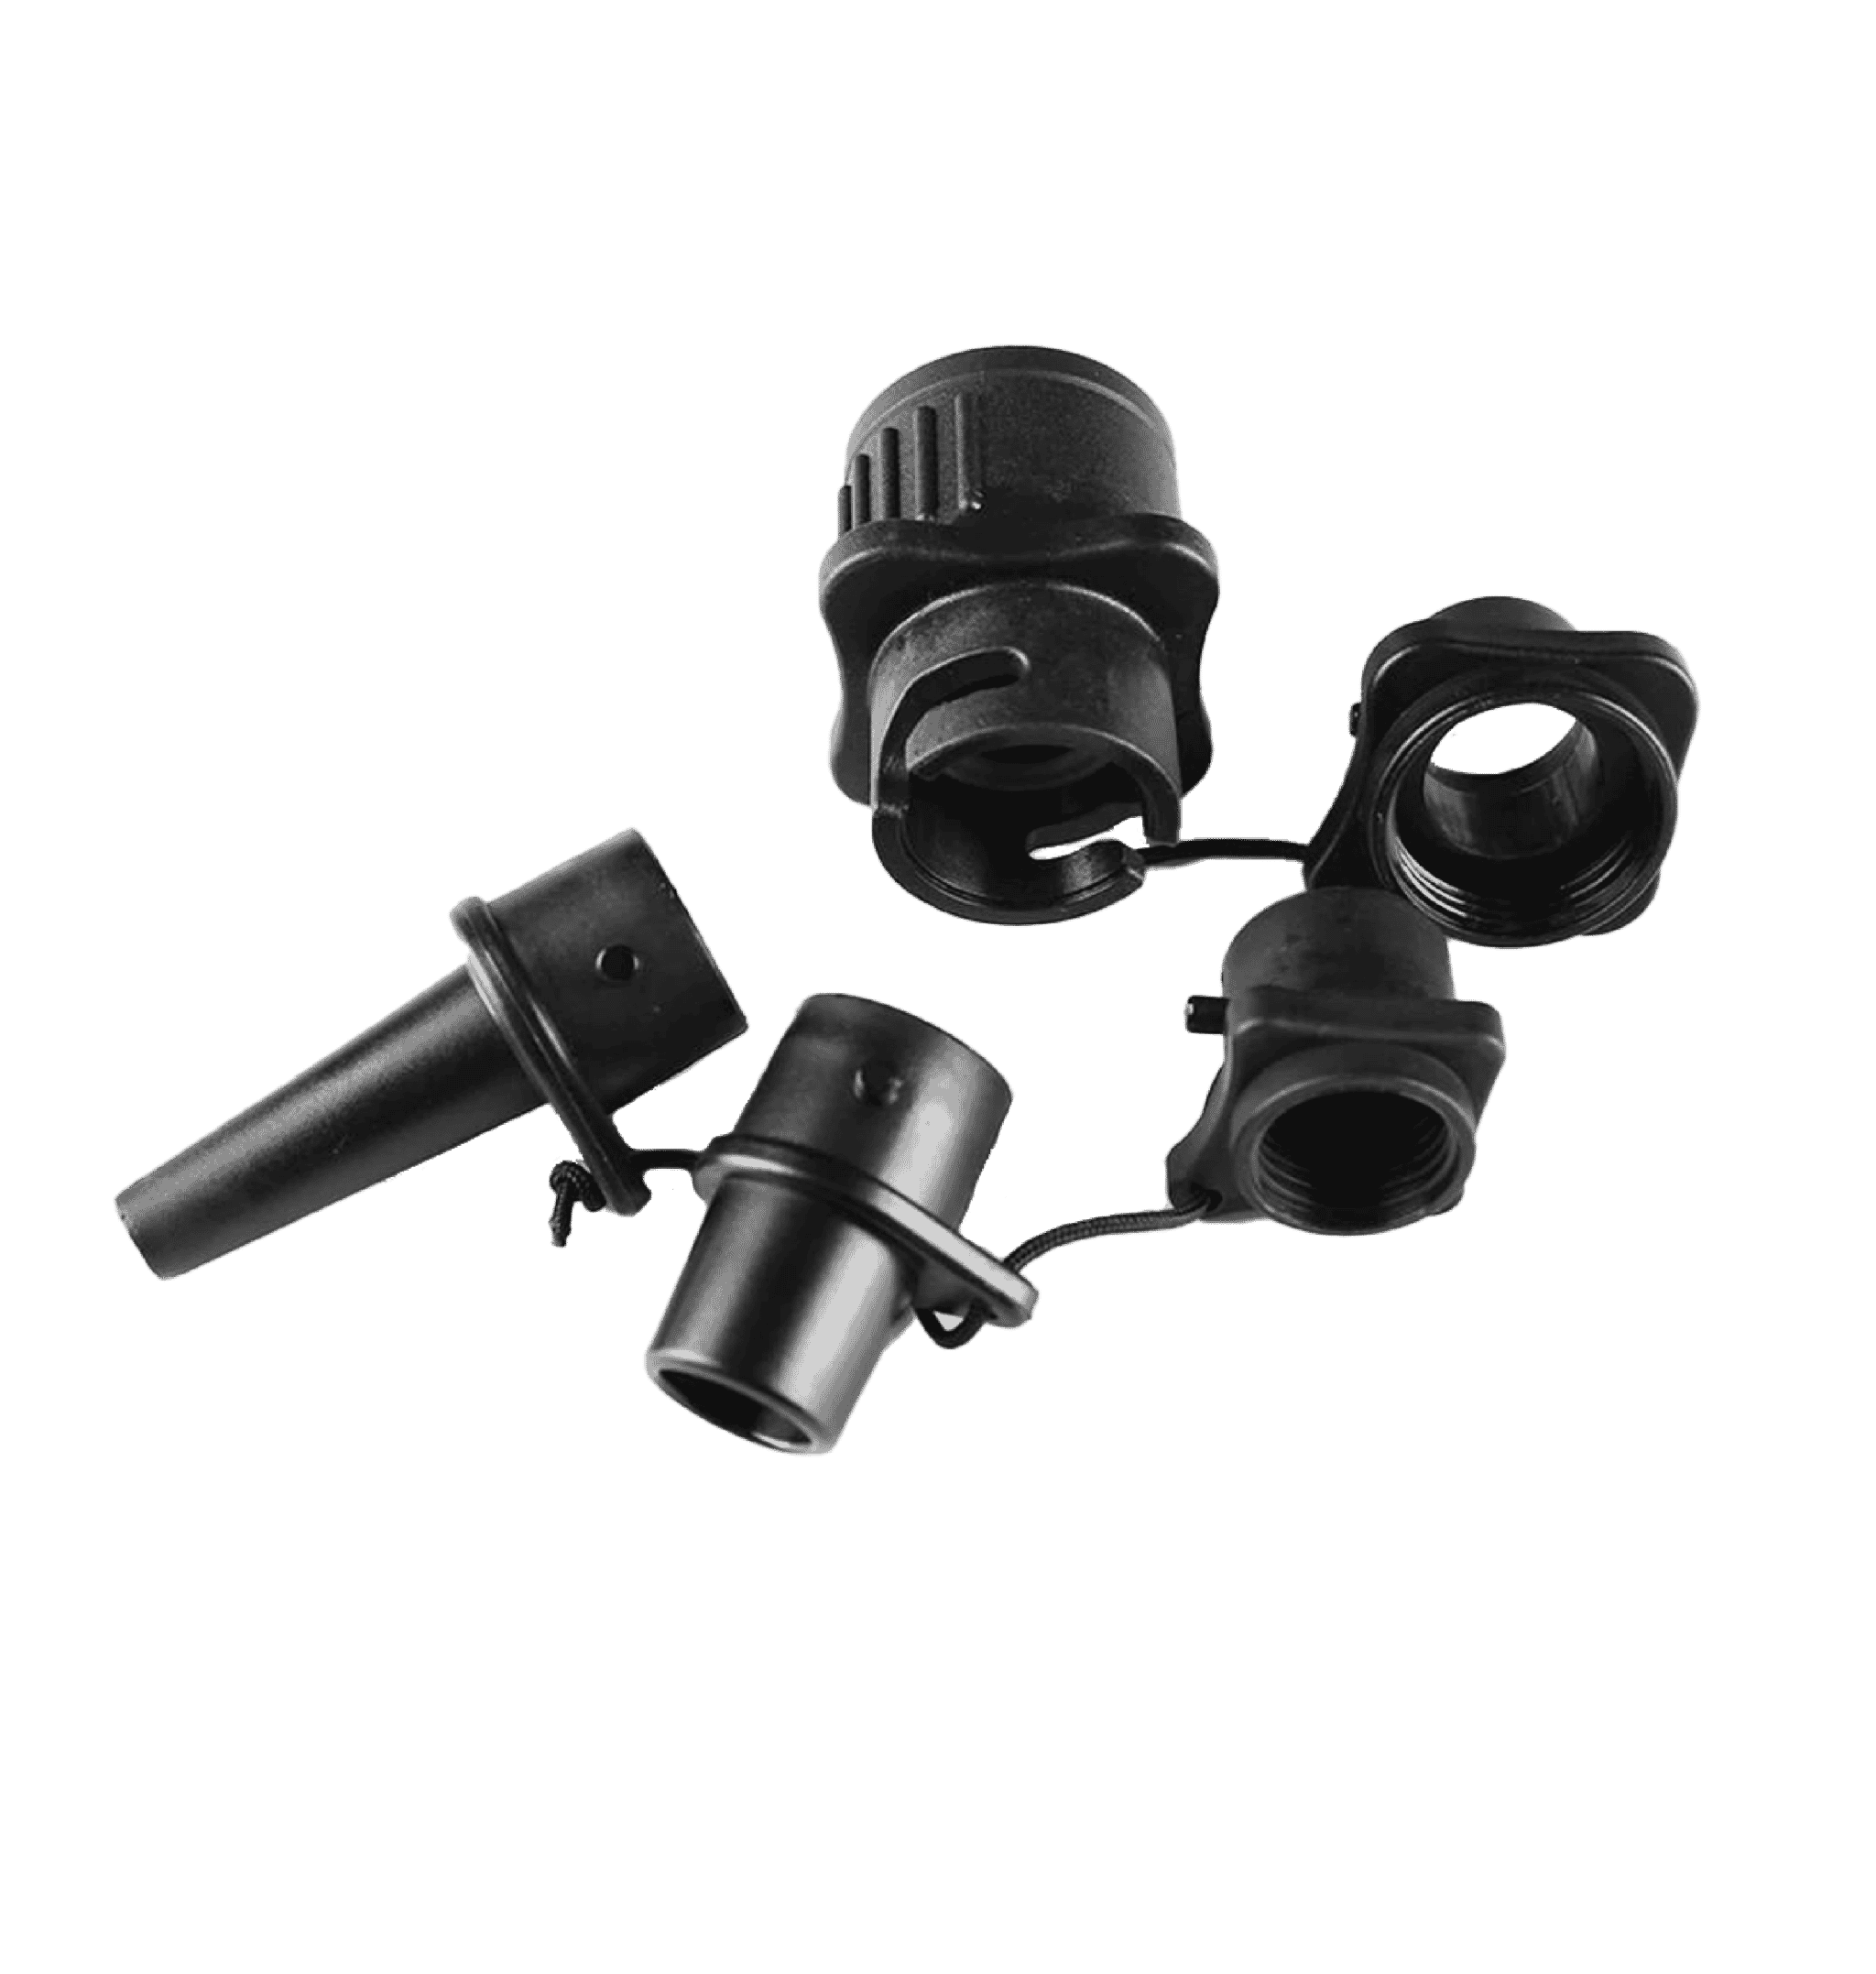 Ventil Adapter Kit for STX Electric Pump